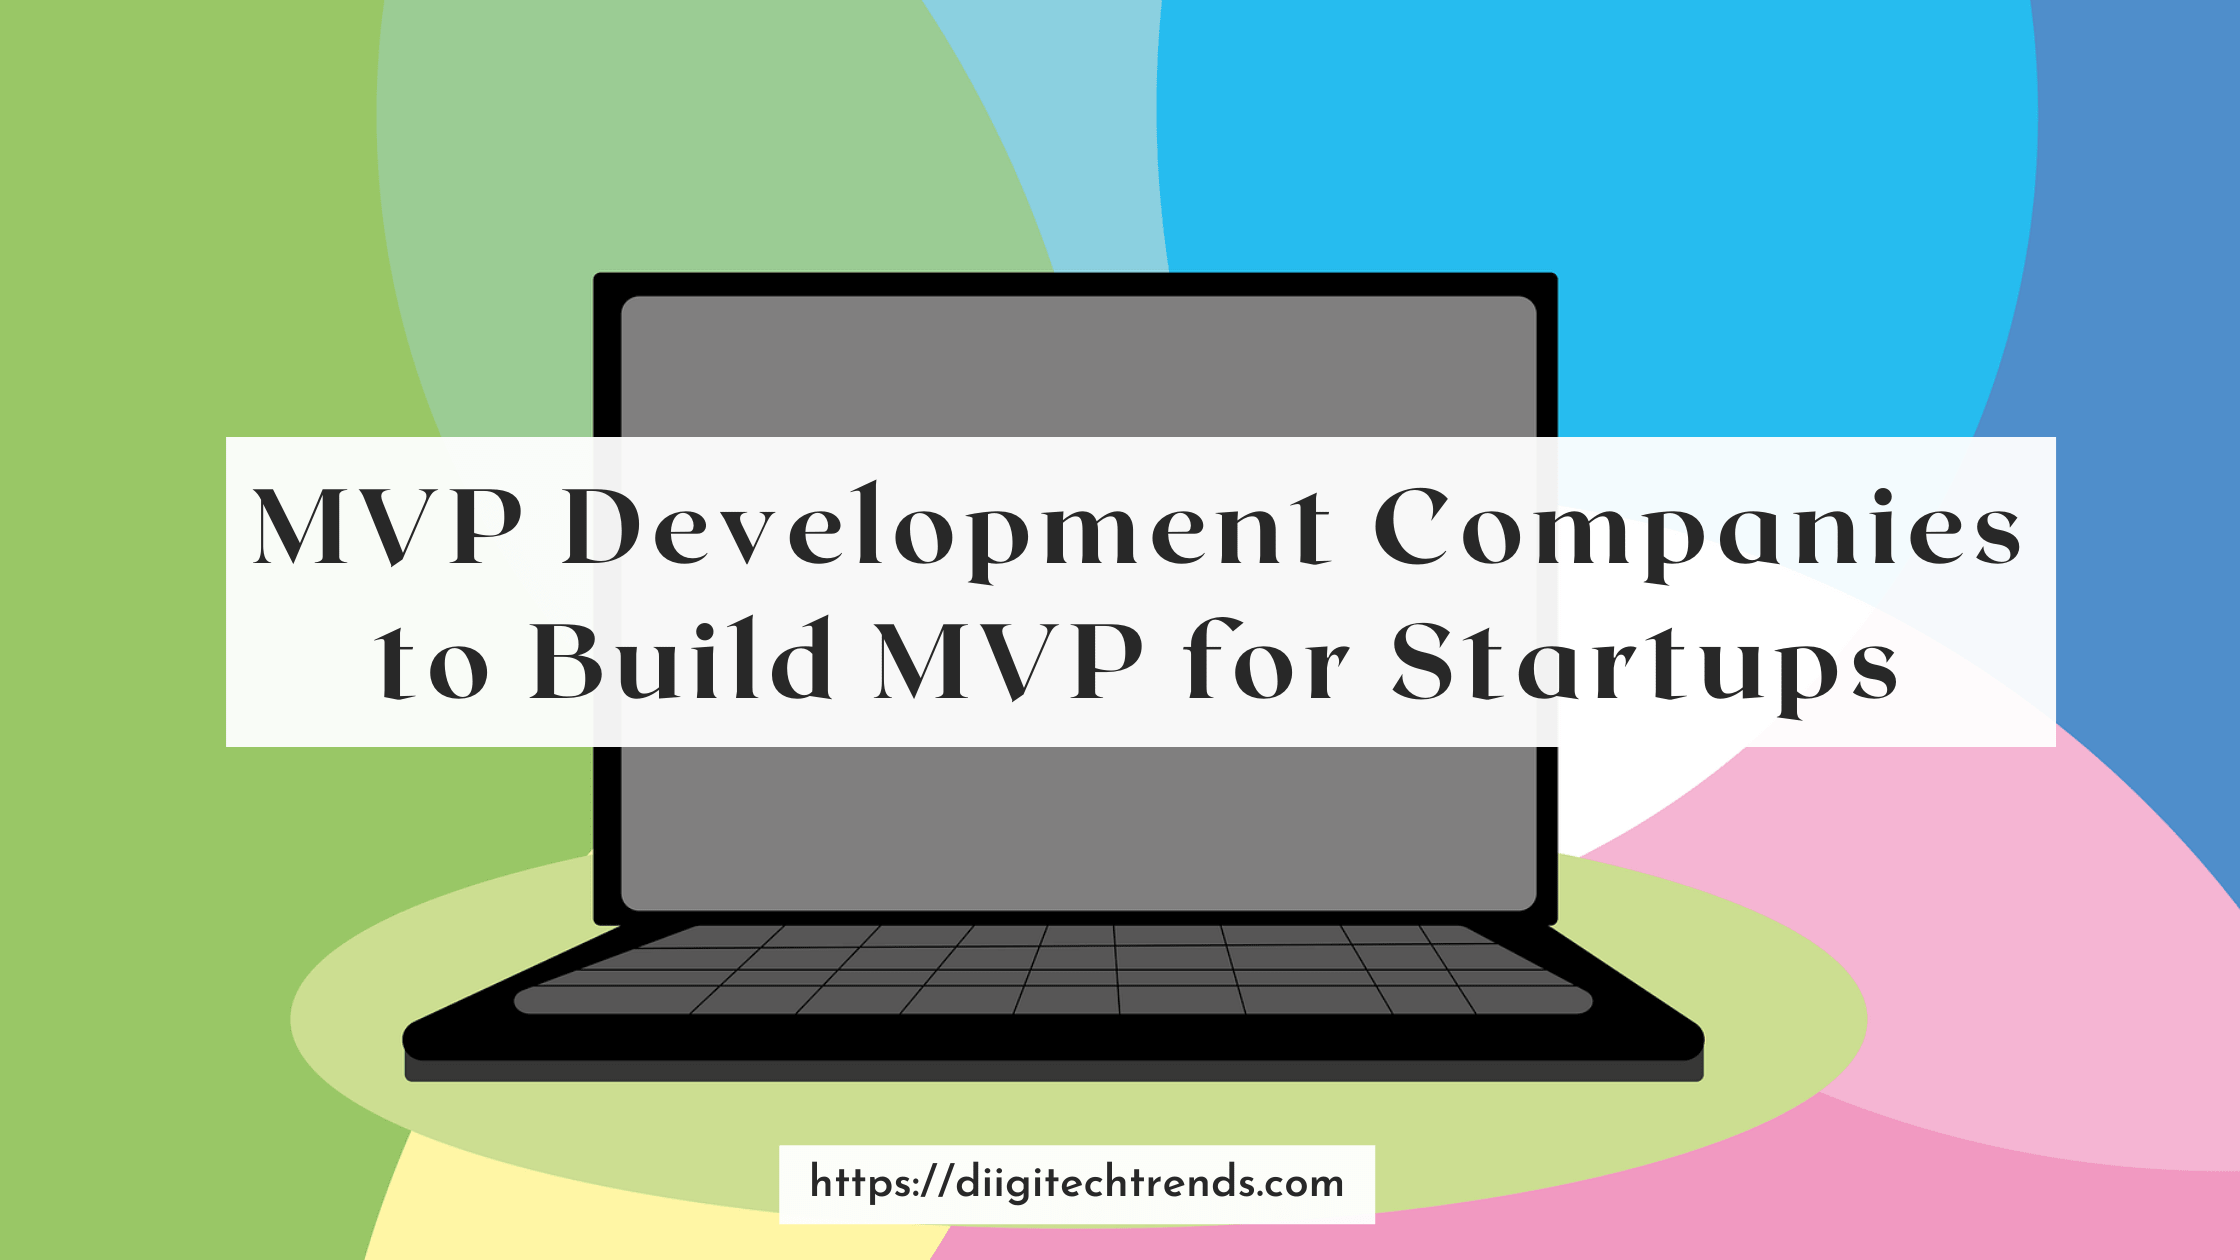 Top MVP Development Companies for Startups